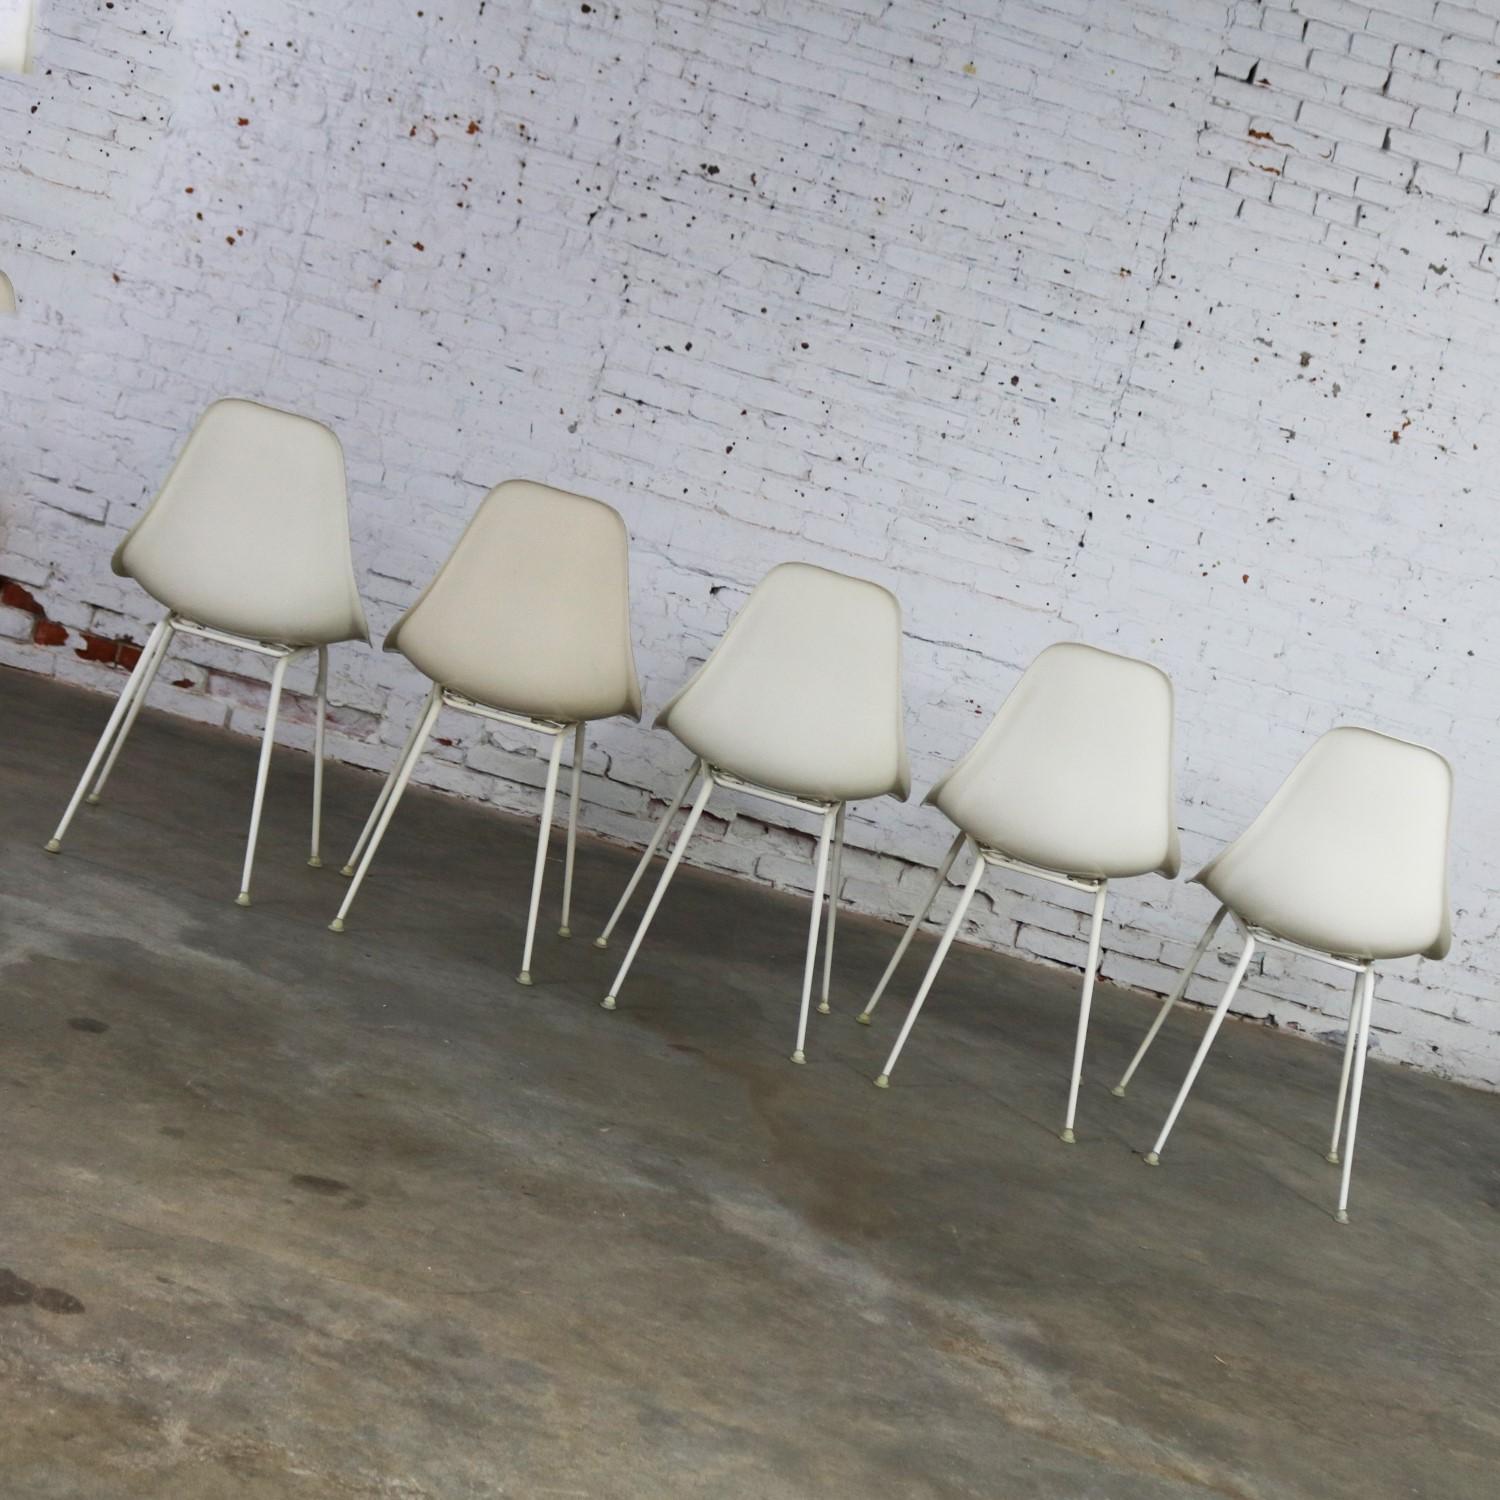 American Burke Fiberglass #103 Shell Chairs with Padded Seats Set of 5 Mid-Century Modern